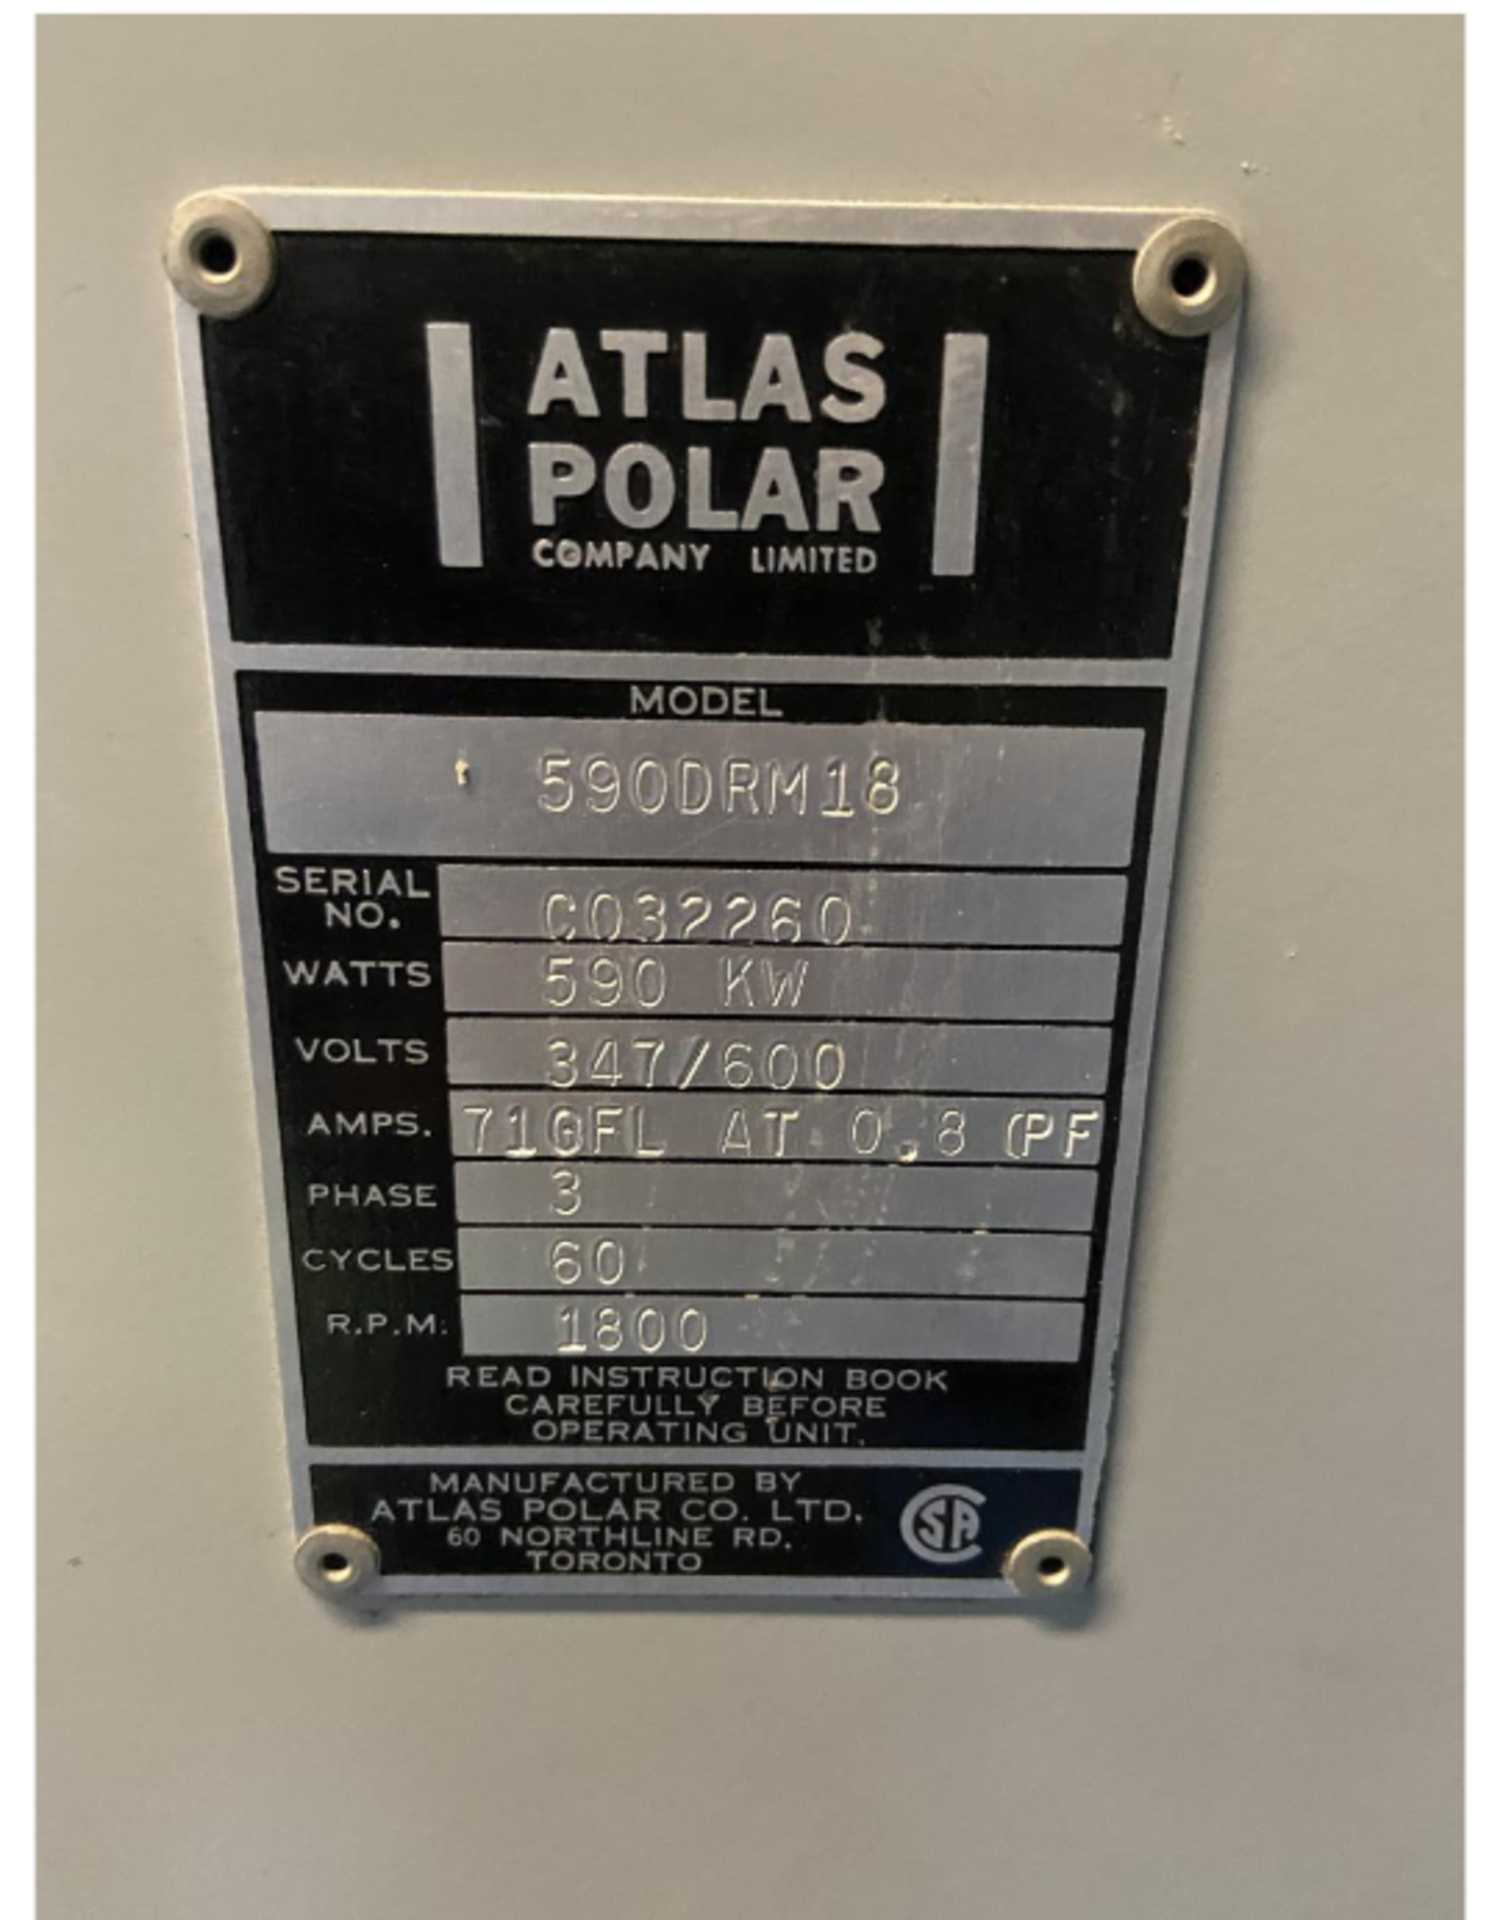 ATLAS POWER GENERATOR, MODEL 590DRM18, 590KW - LOCATION OTTAWA, ONTARIO - Image 3 of 5